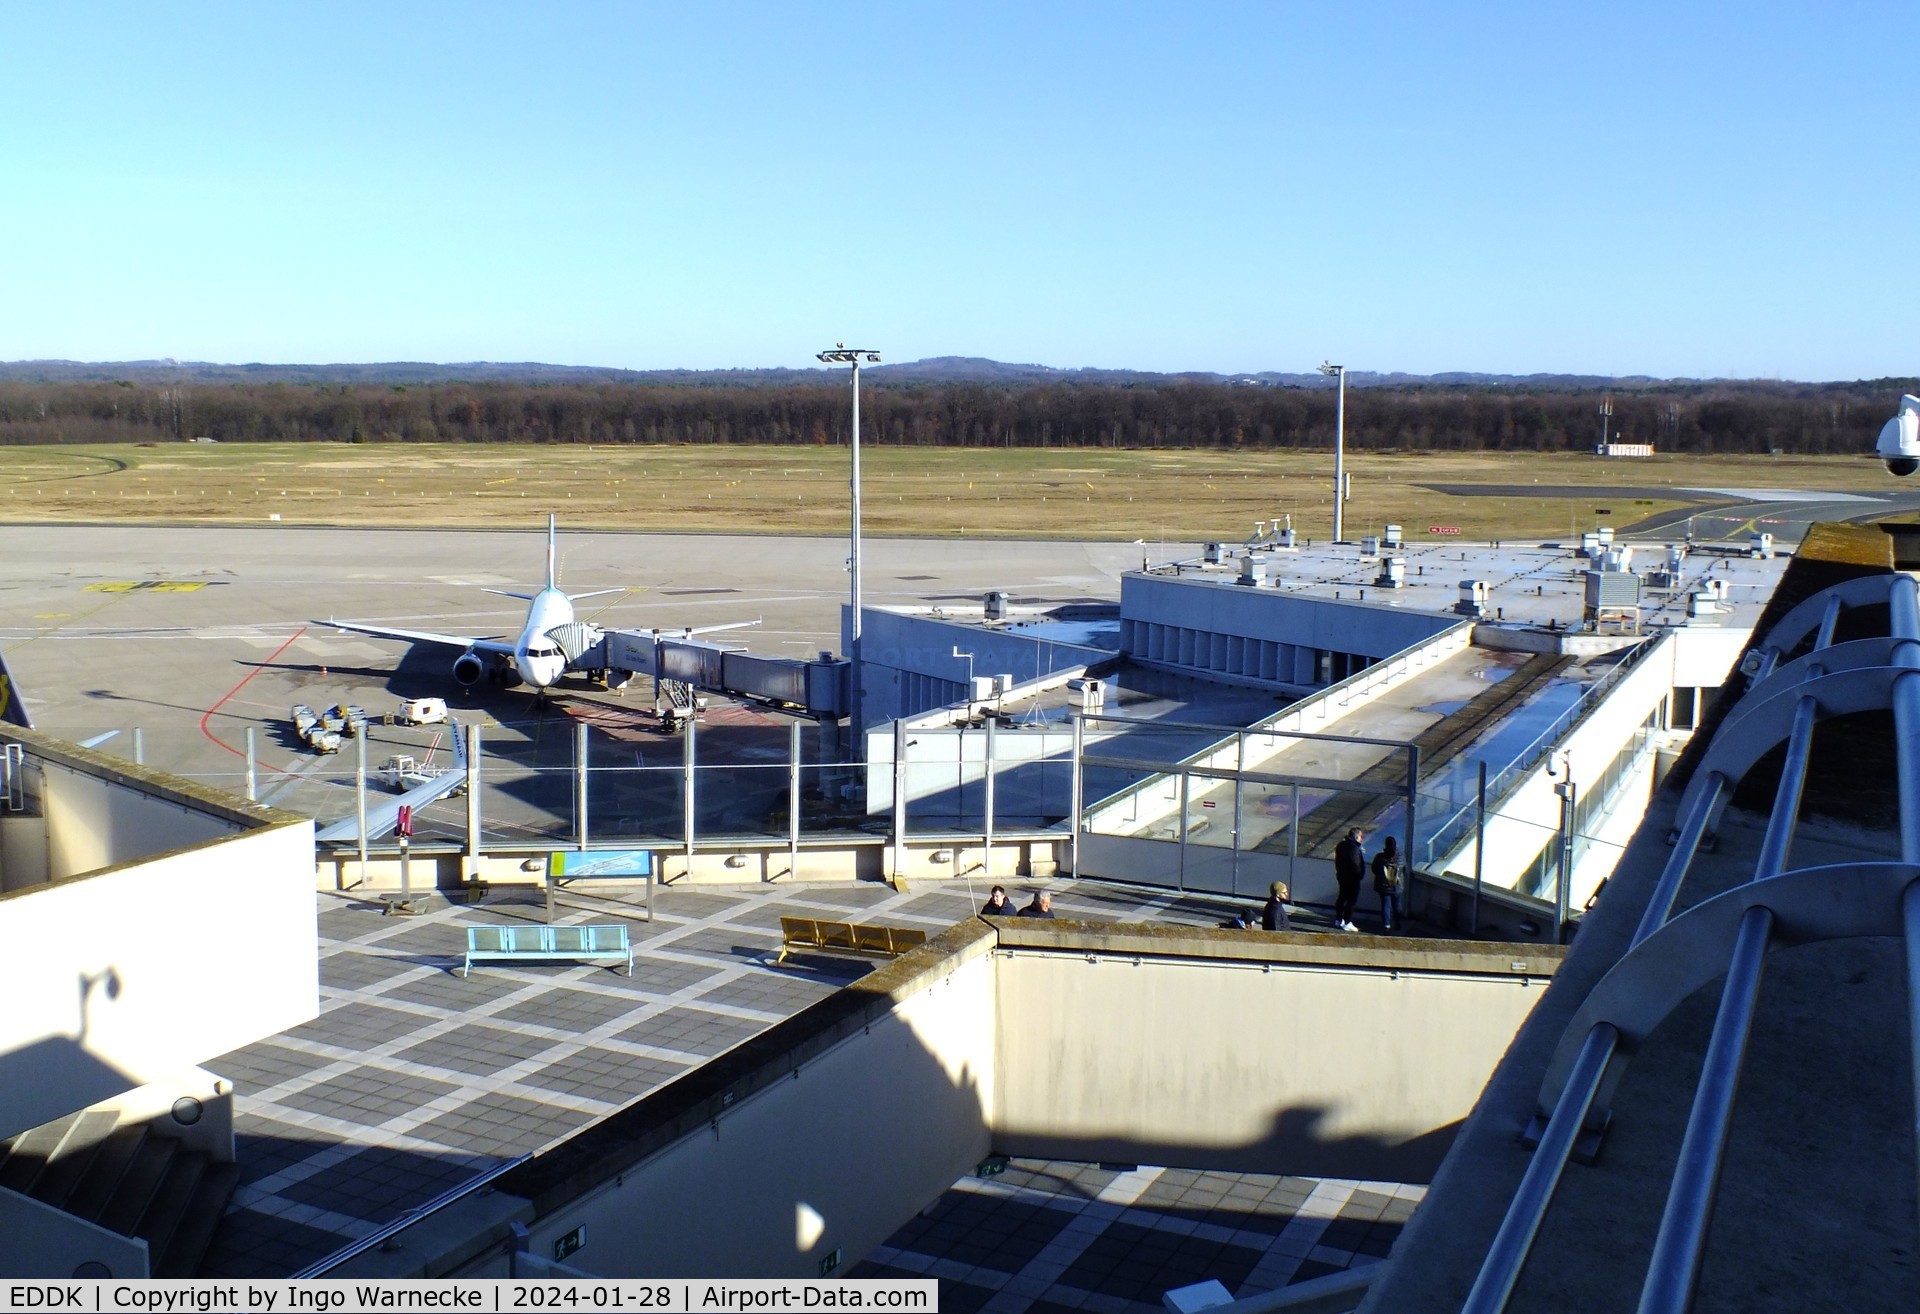 Cologne Bonn Airport, Cologne/Bonn Germany (EDDK) - visitors terrace and northern gates building of terminal 1 at Köln/Bonn airport